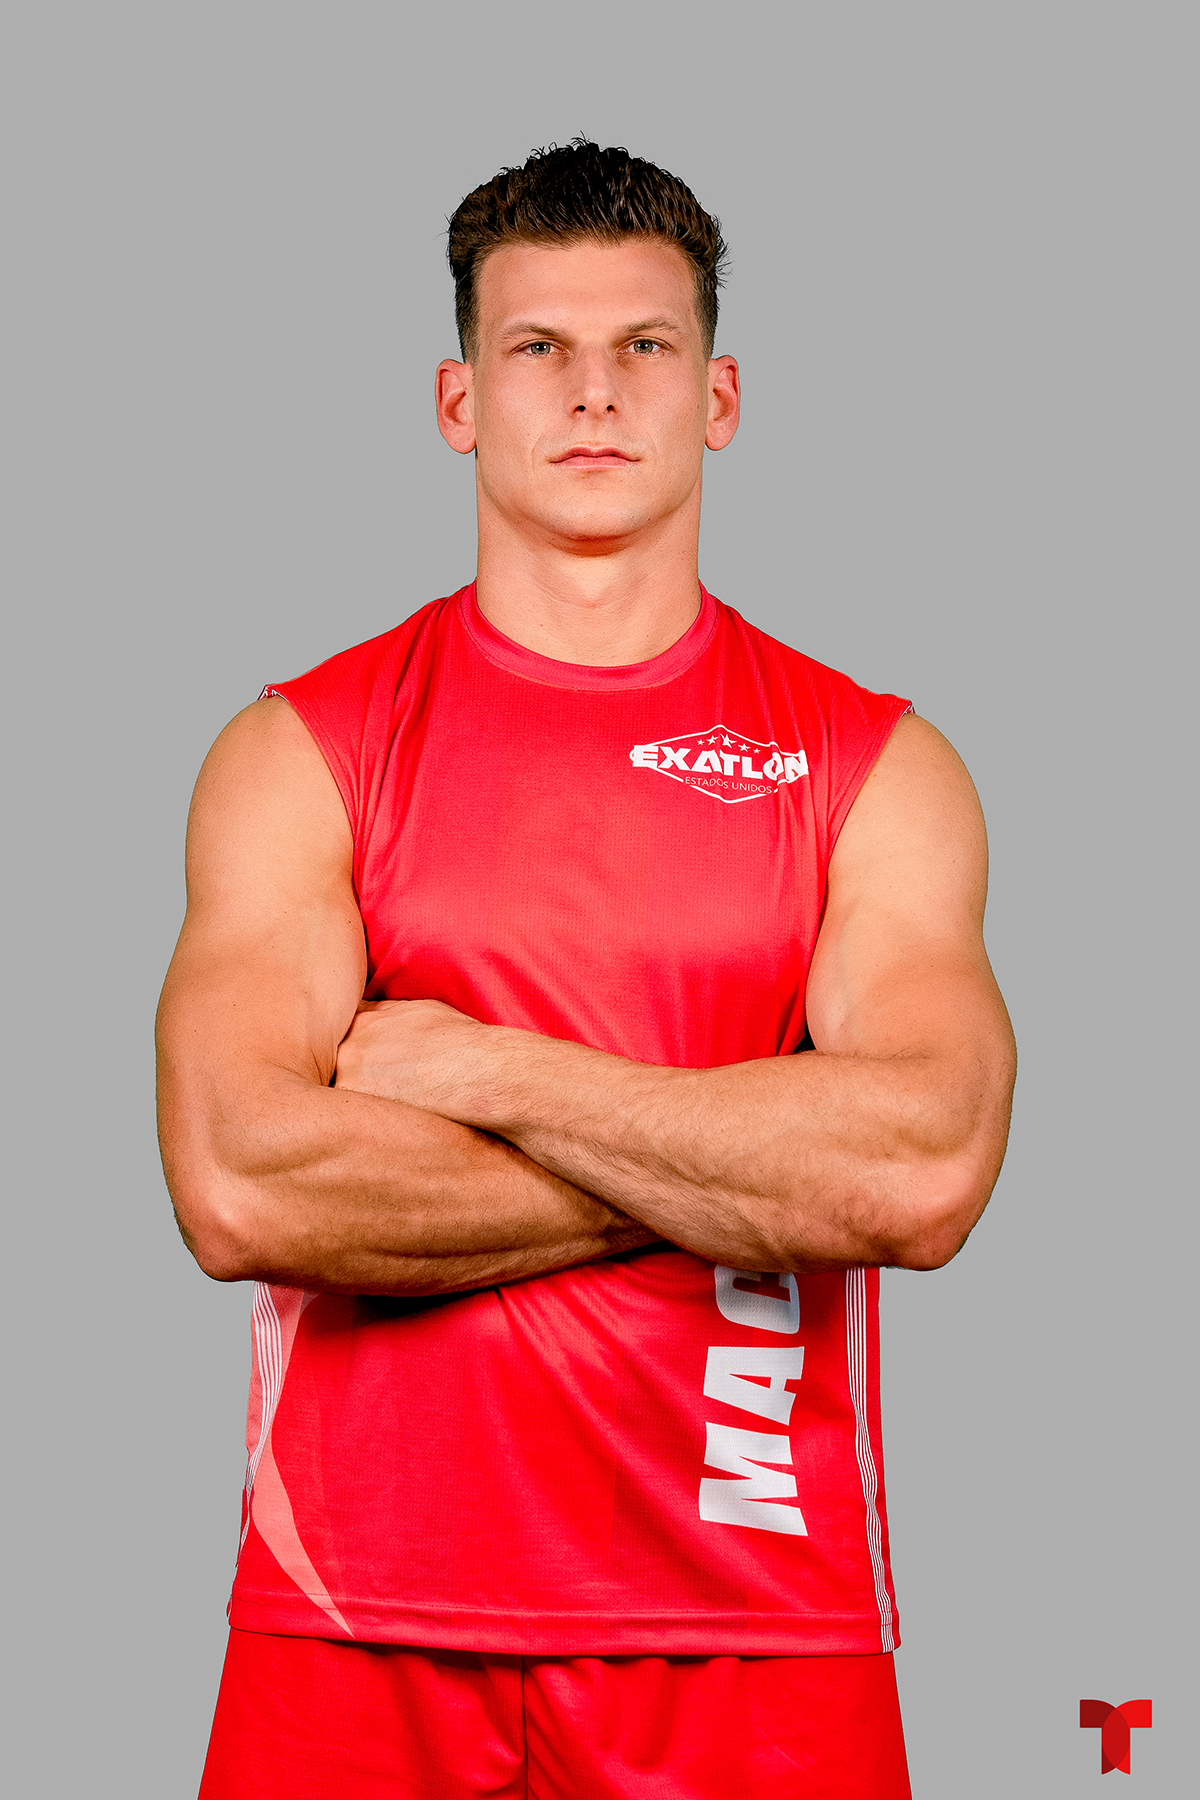 Mack Roesch del equipo rojo de Exatlón